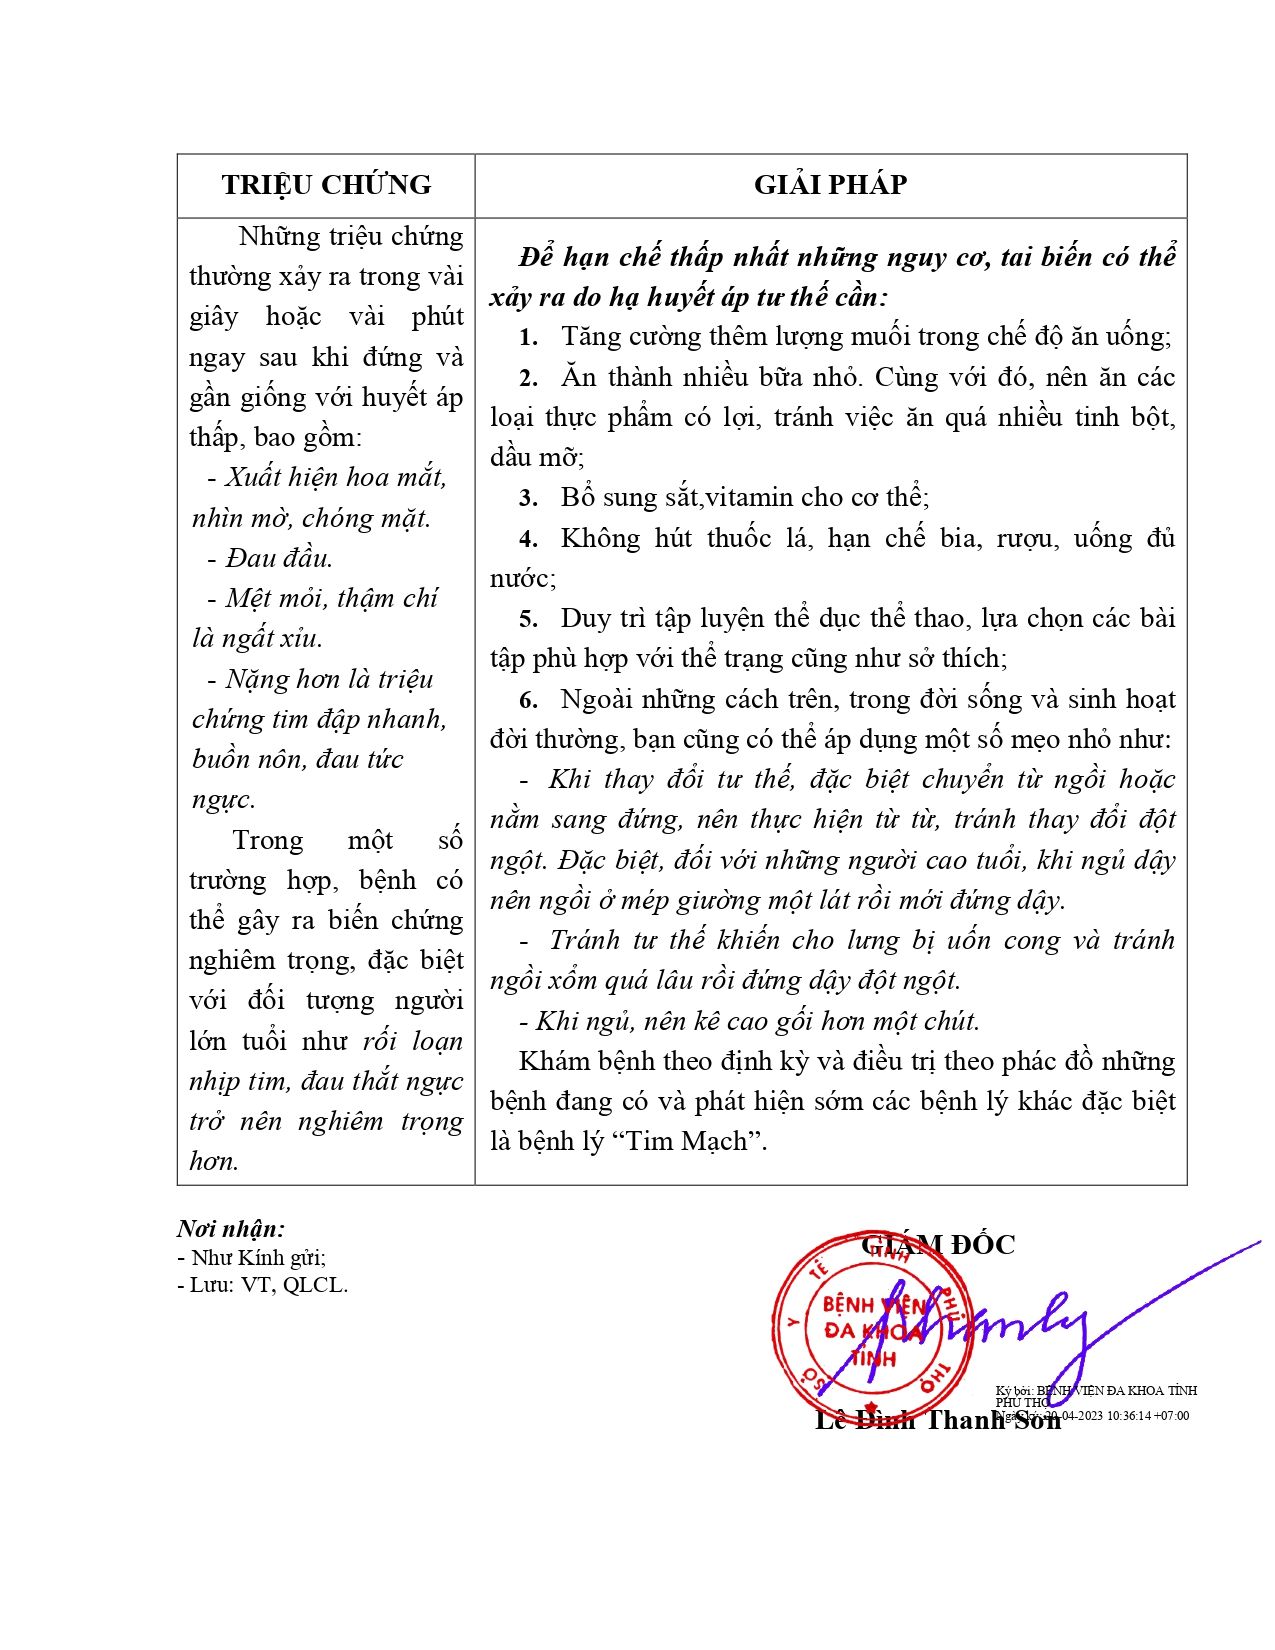 signed signed khuyen cao so 02 ha huyet ap tu the nguy co tai bien cach phong ngua page 0002